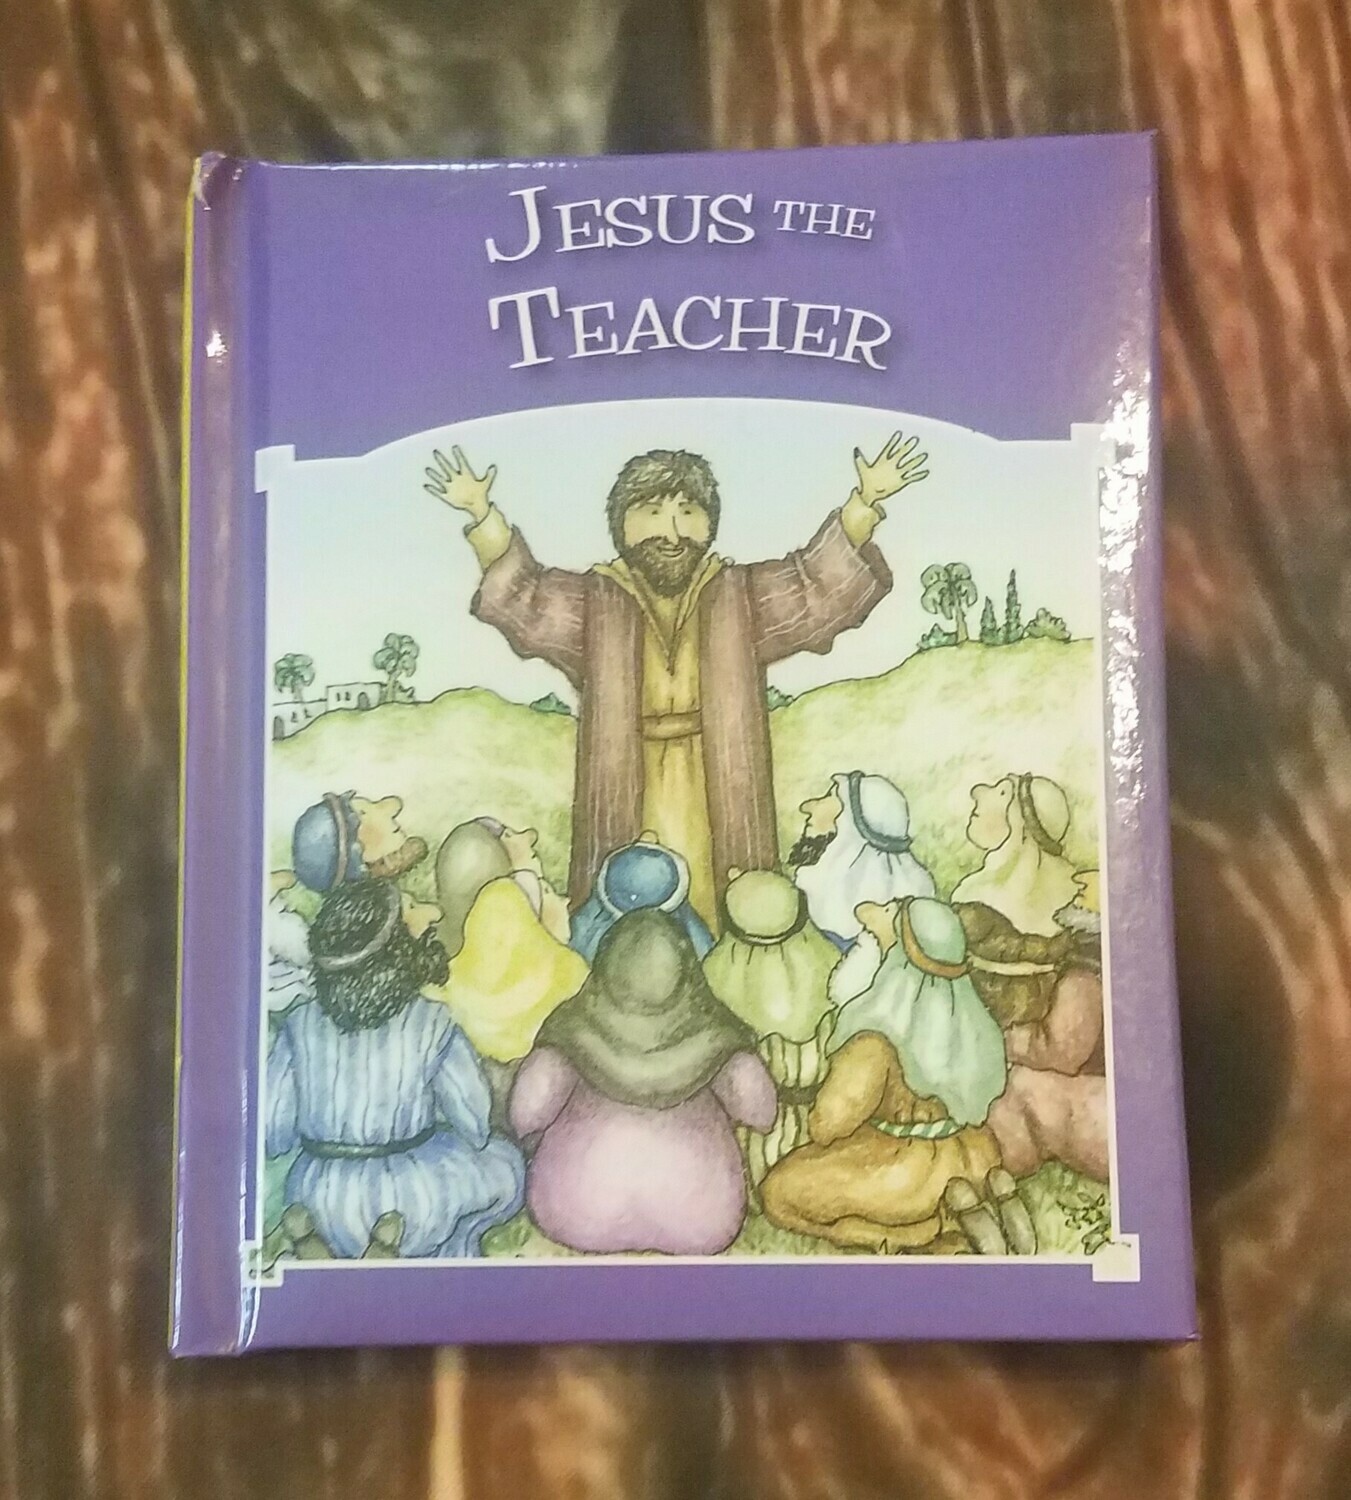 Jesus the Teacher by Tim and Jenny Wood